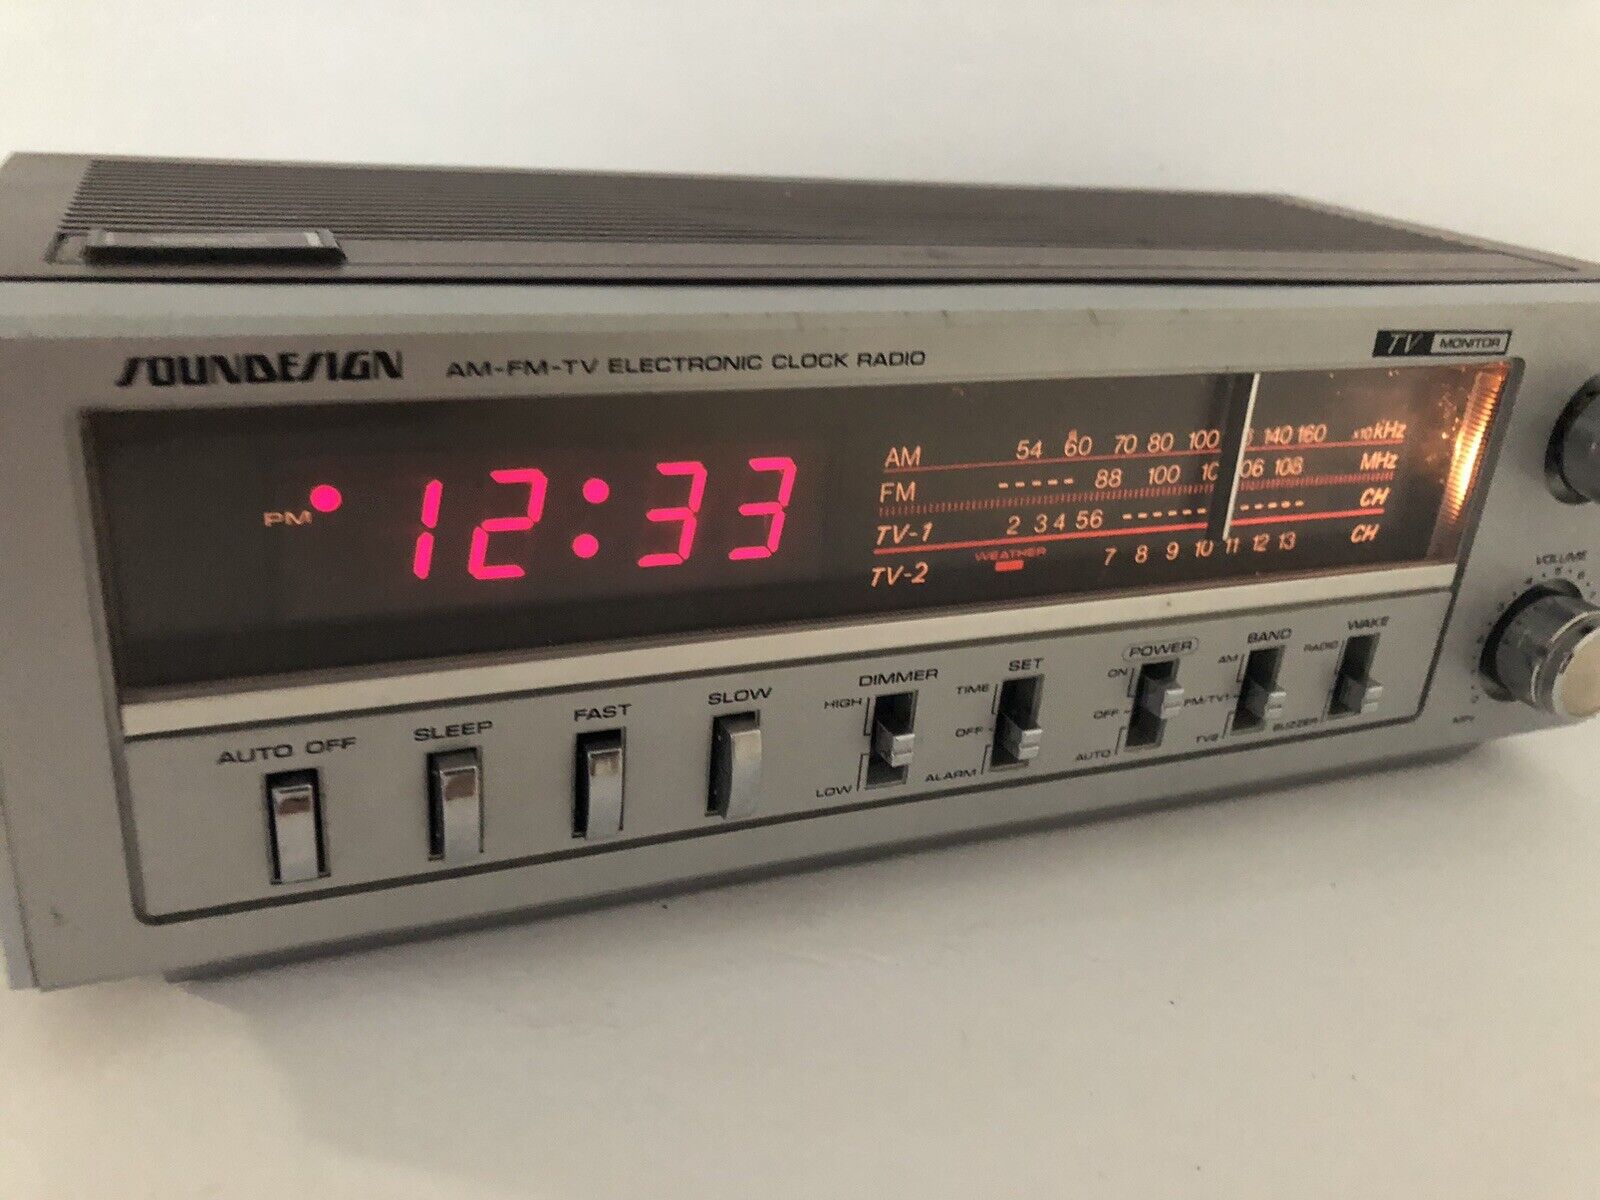 Soundesign AM FM TV Electronic Clock Radio Model 3772-(A) Vintage Wood 1980’s